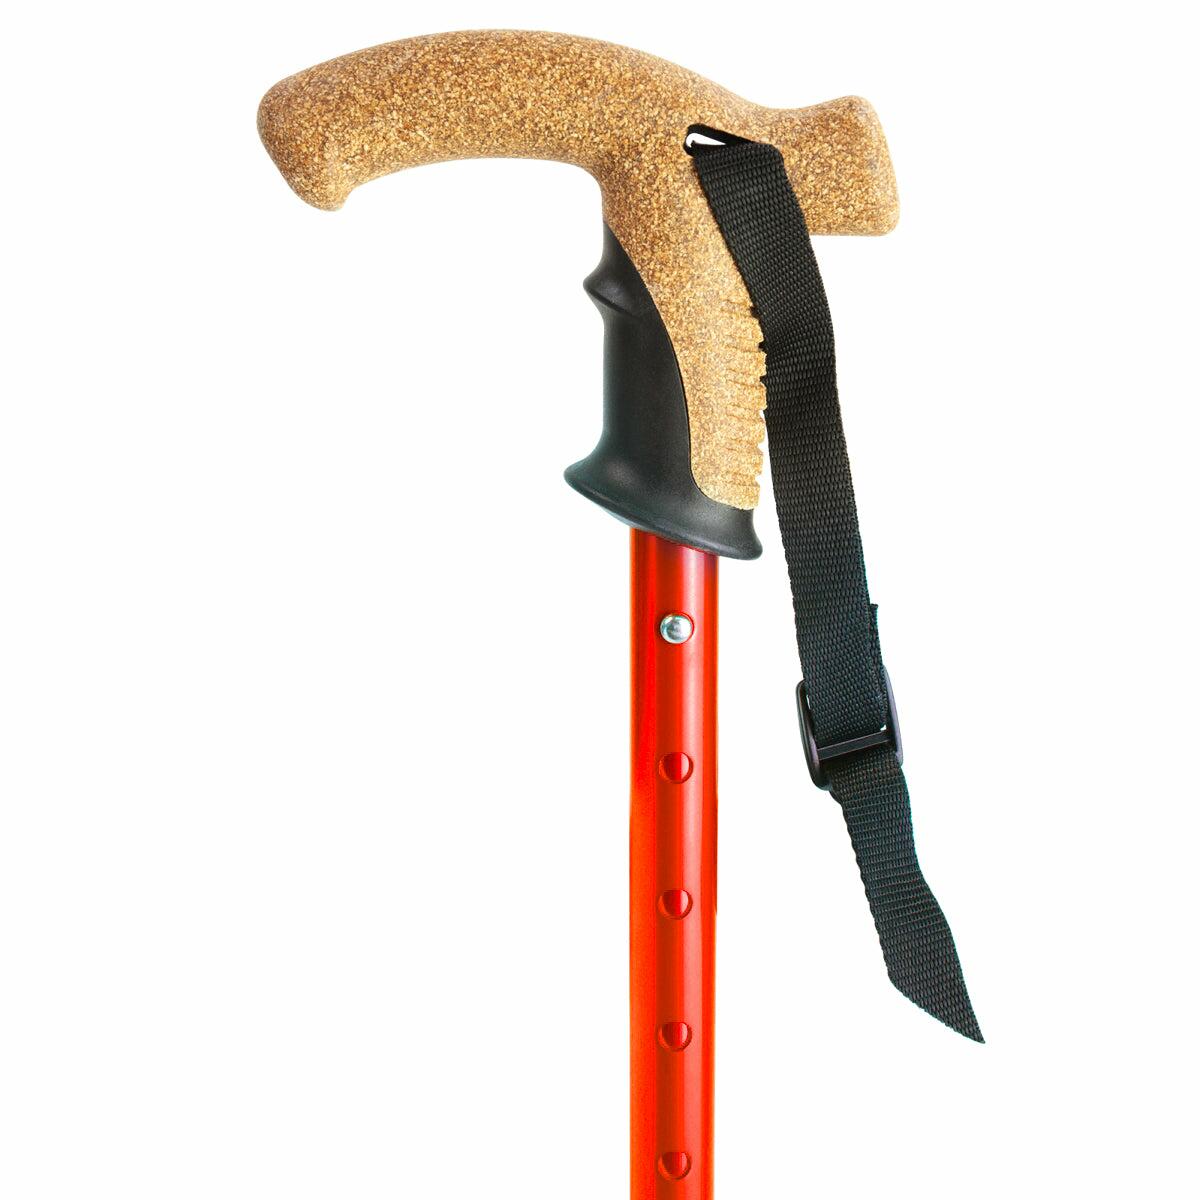 The cork handle of a red Flexyfoot Premium Cork Handle Walking Stick